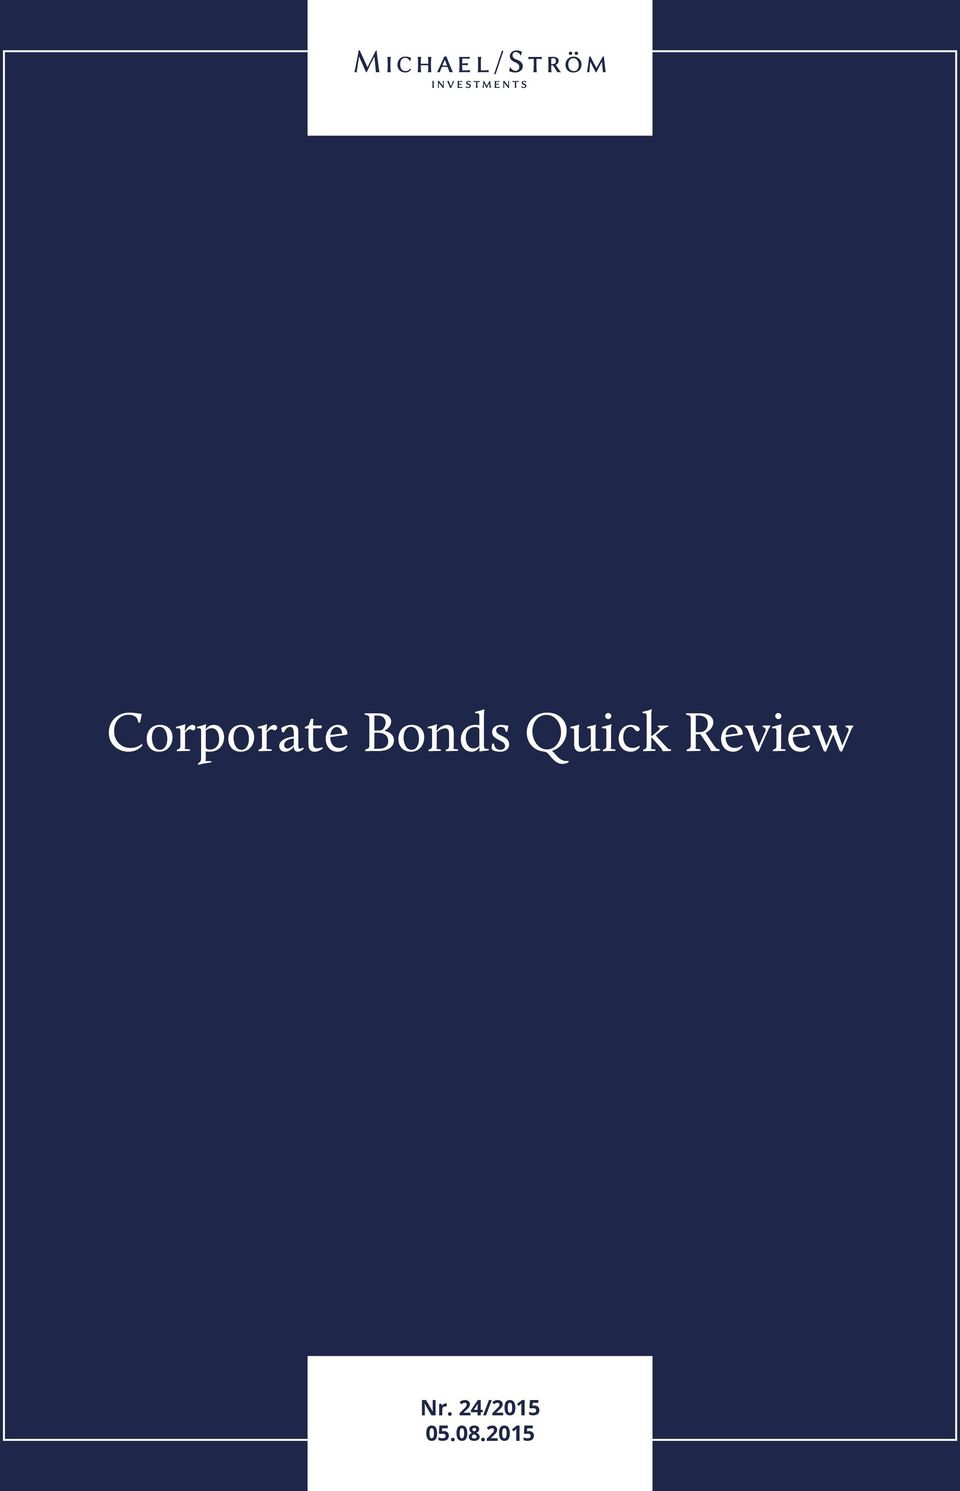 2015 Corporate Bonds